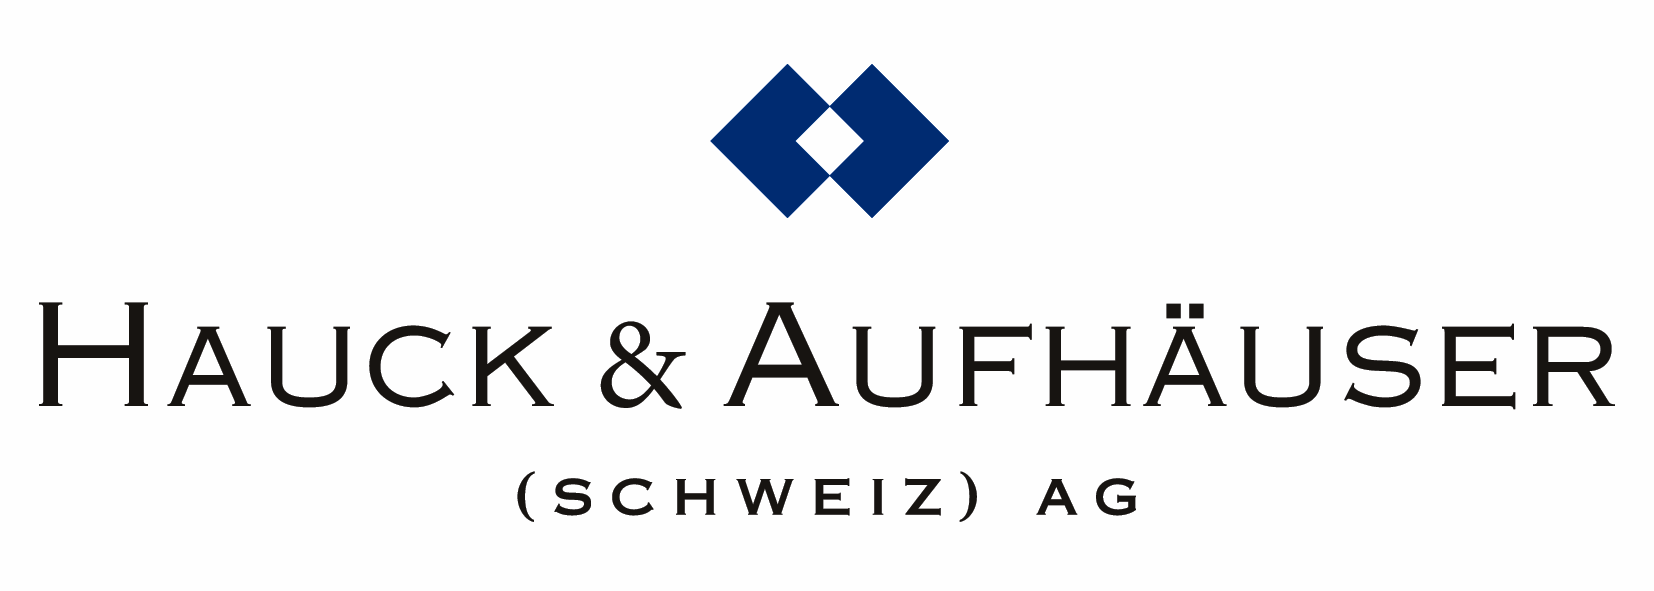 Logo of Hauck & Aufhäuser (Schweiz) AG